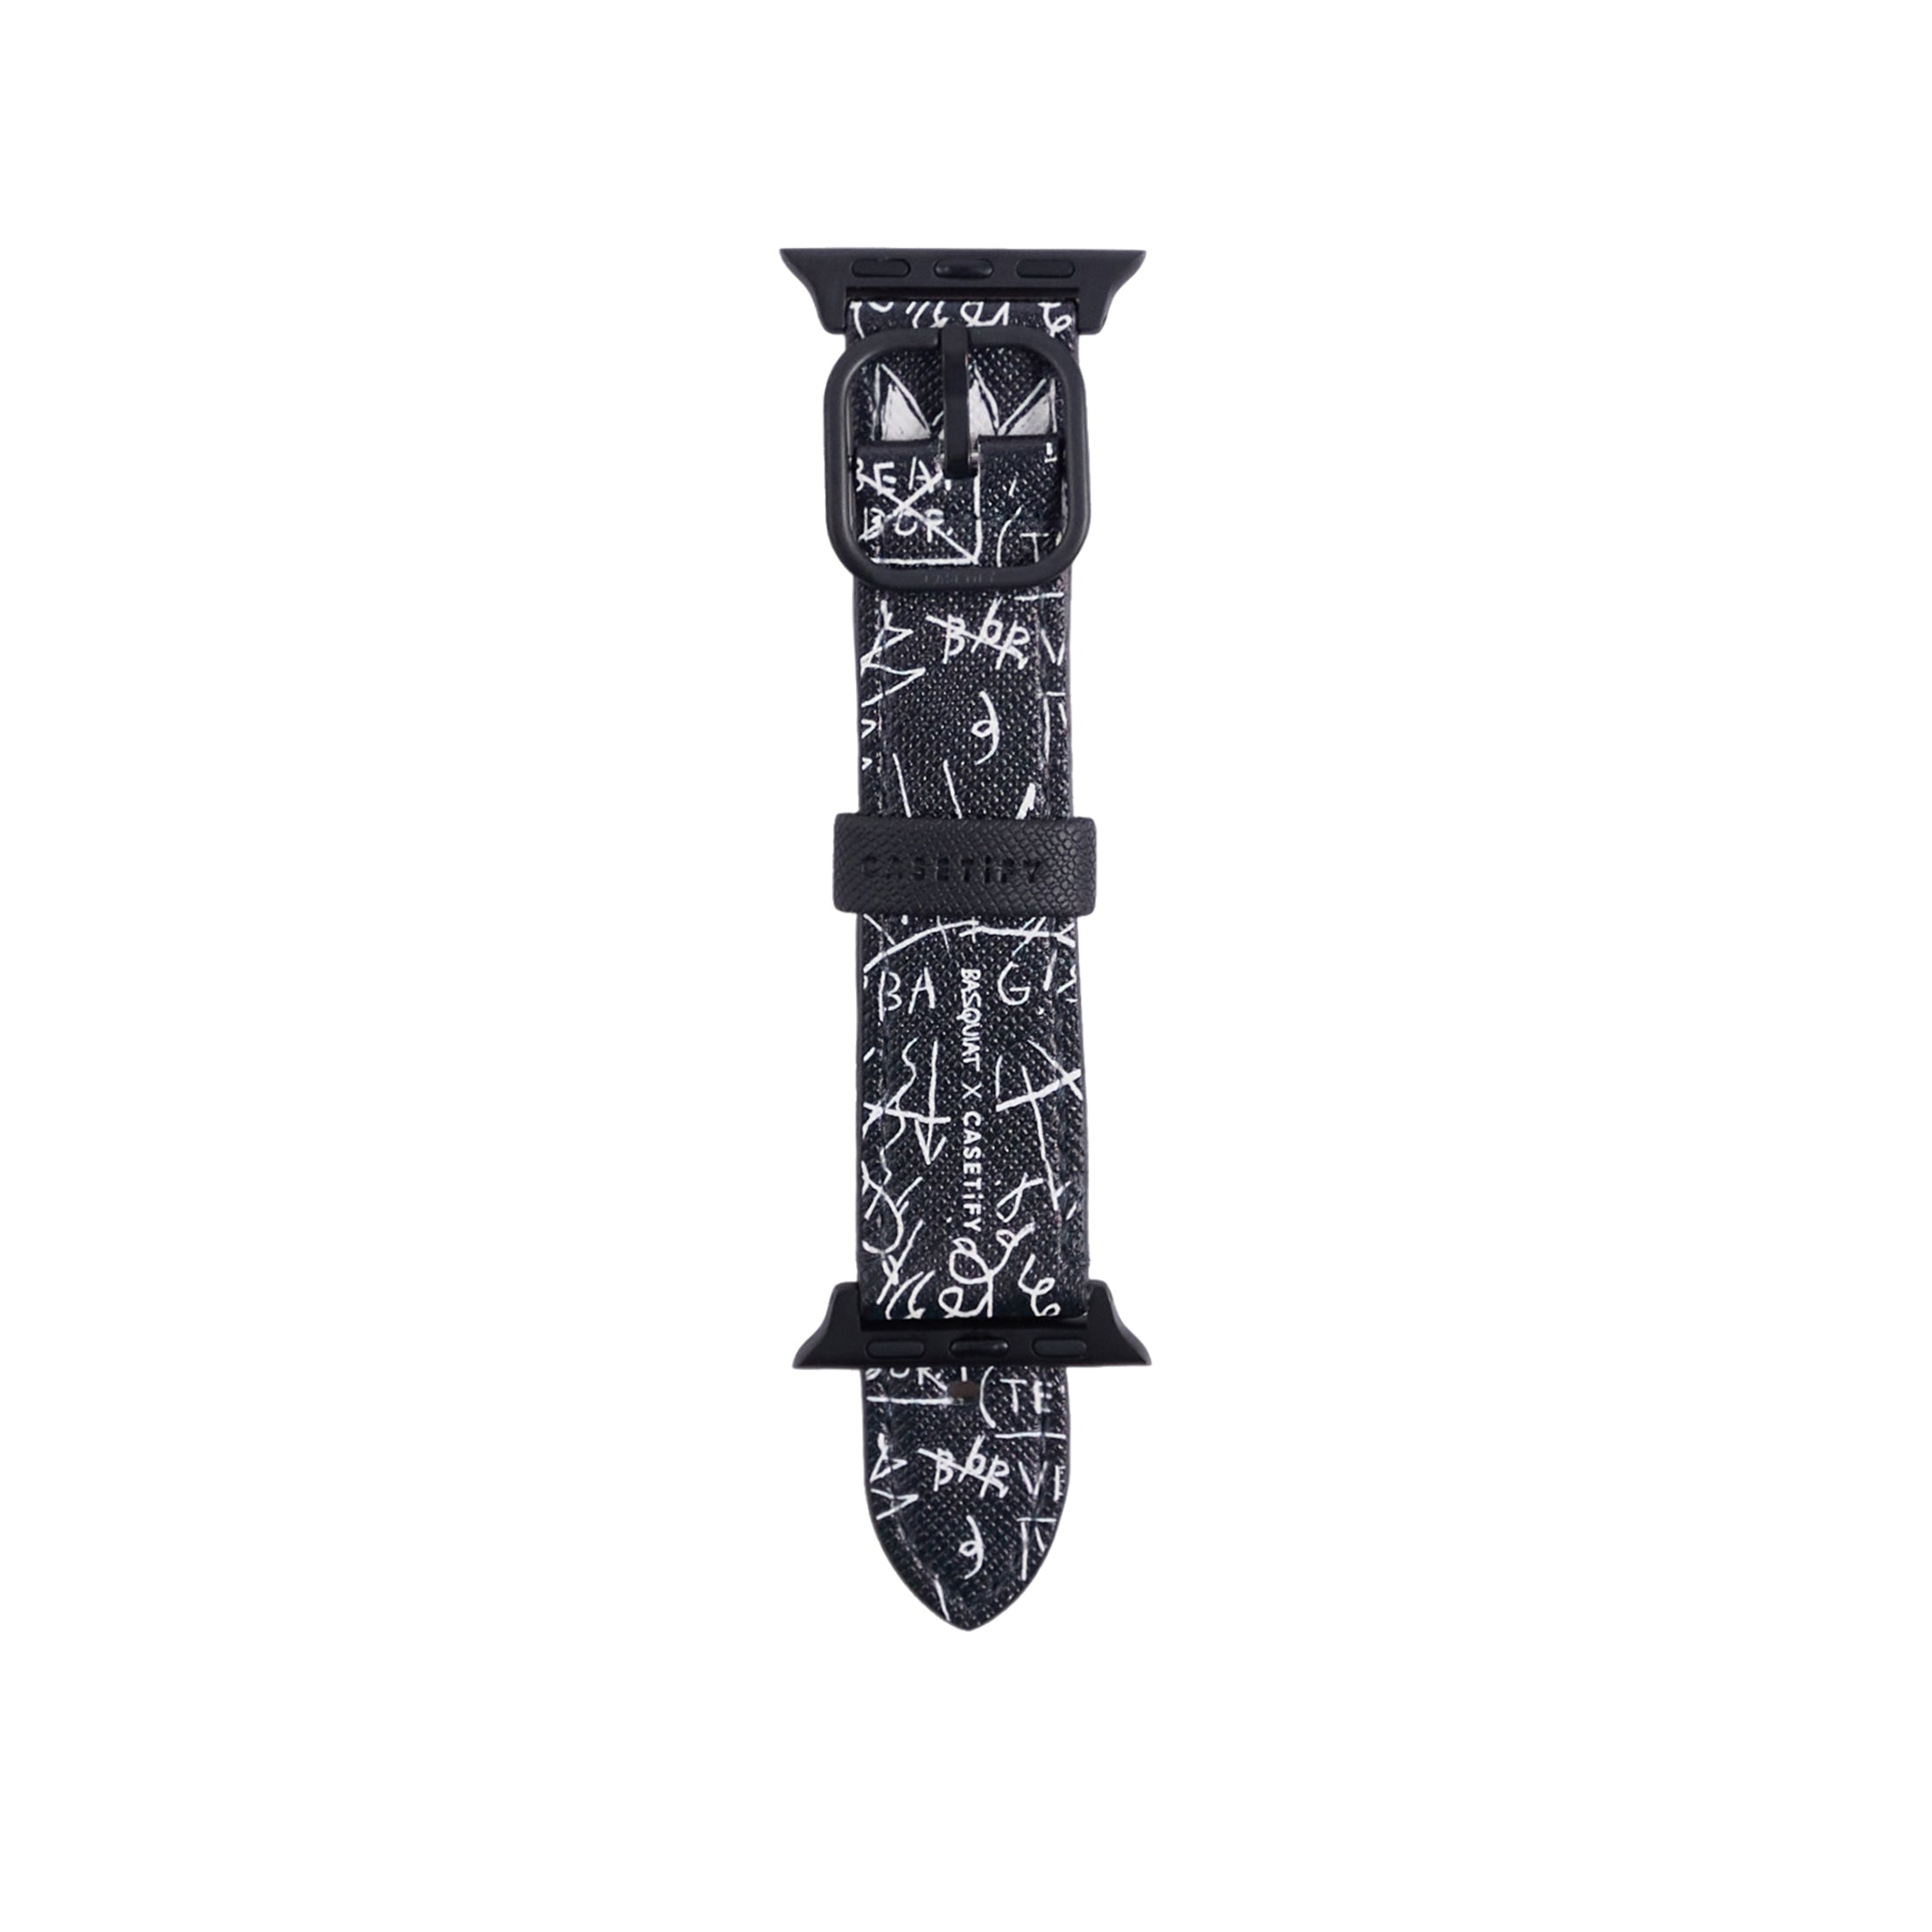 A Few Fair Watches - Ishtar by Jean-Michel Basquiat Limited versus Regular  - YouTube